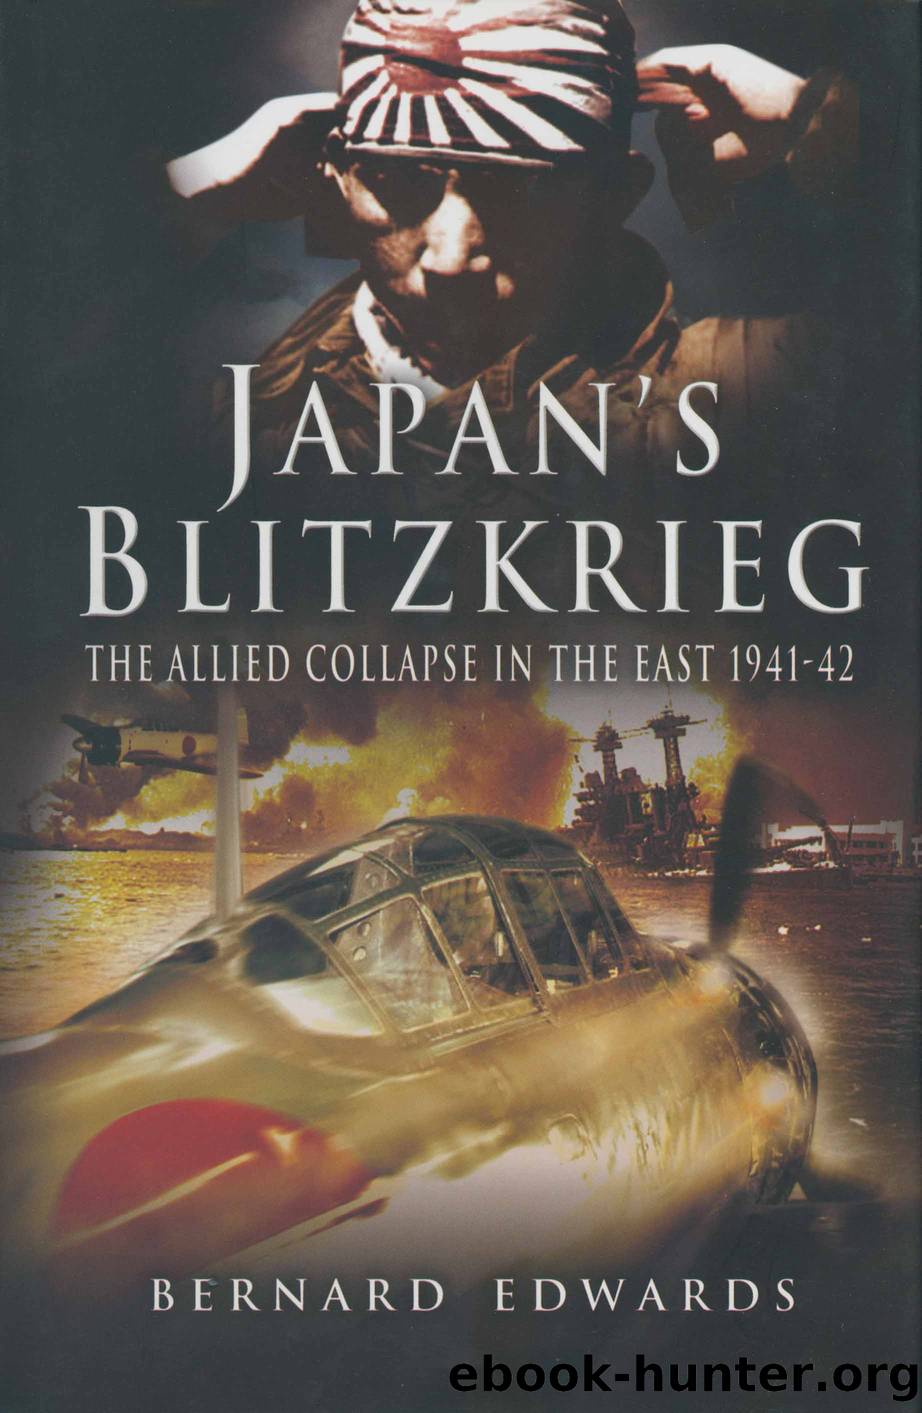 Japanâs Blitzkrieg by Bernard Edwards